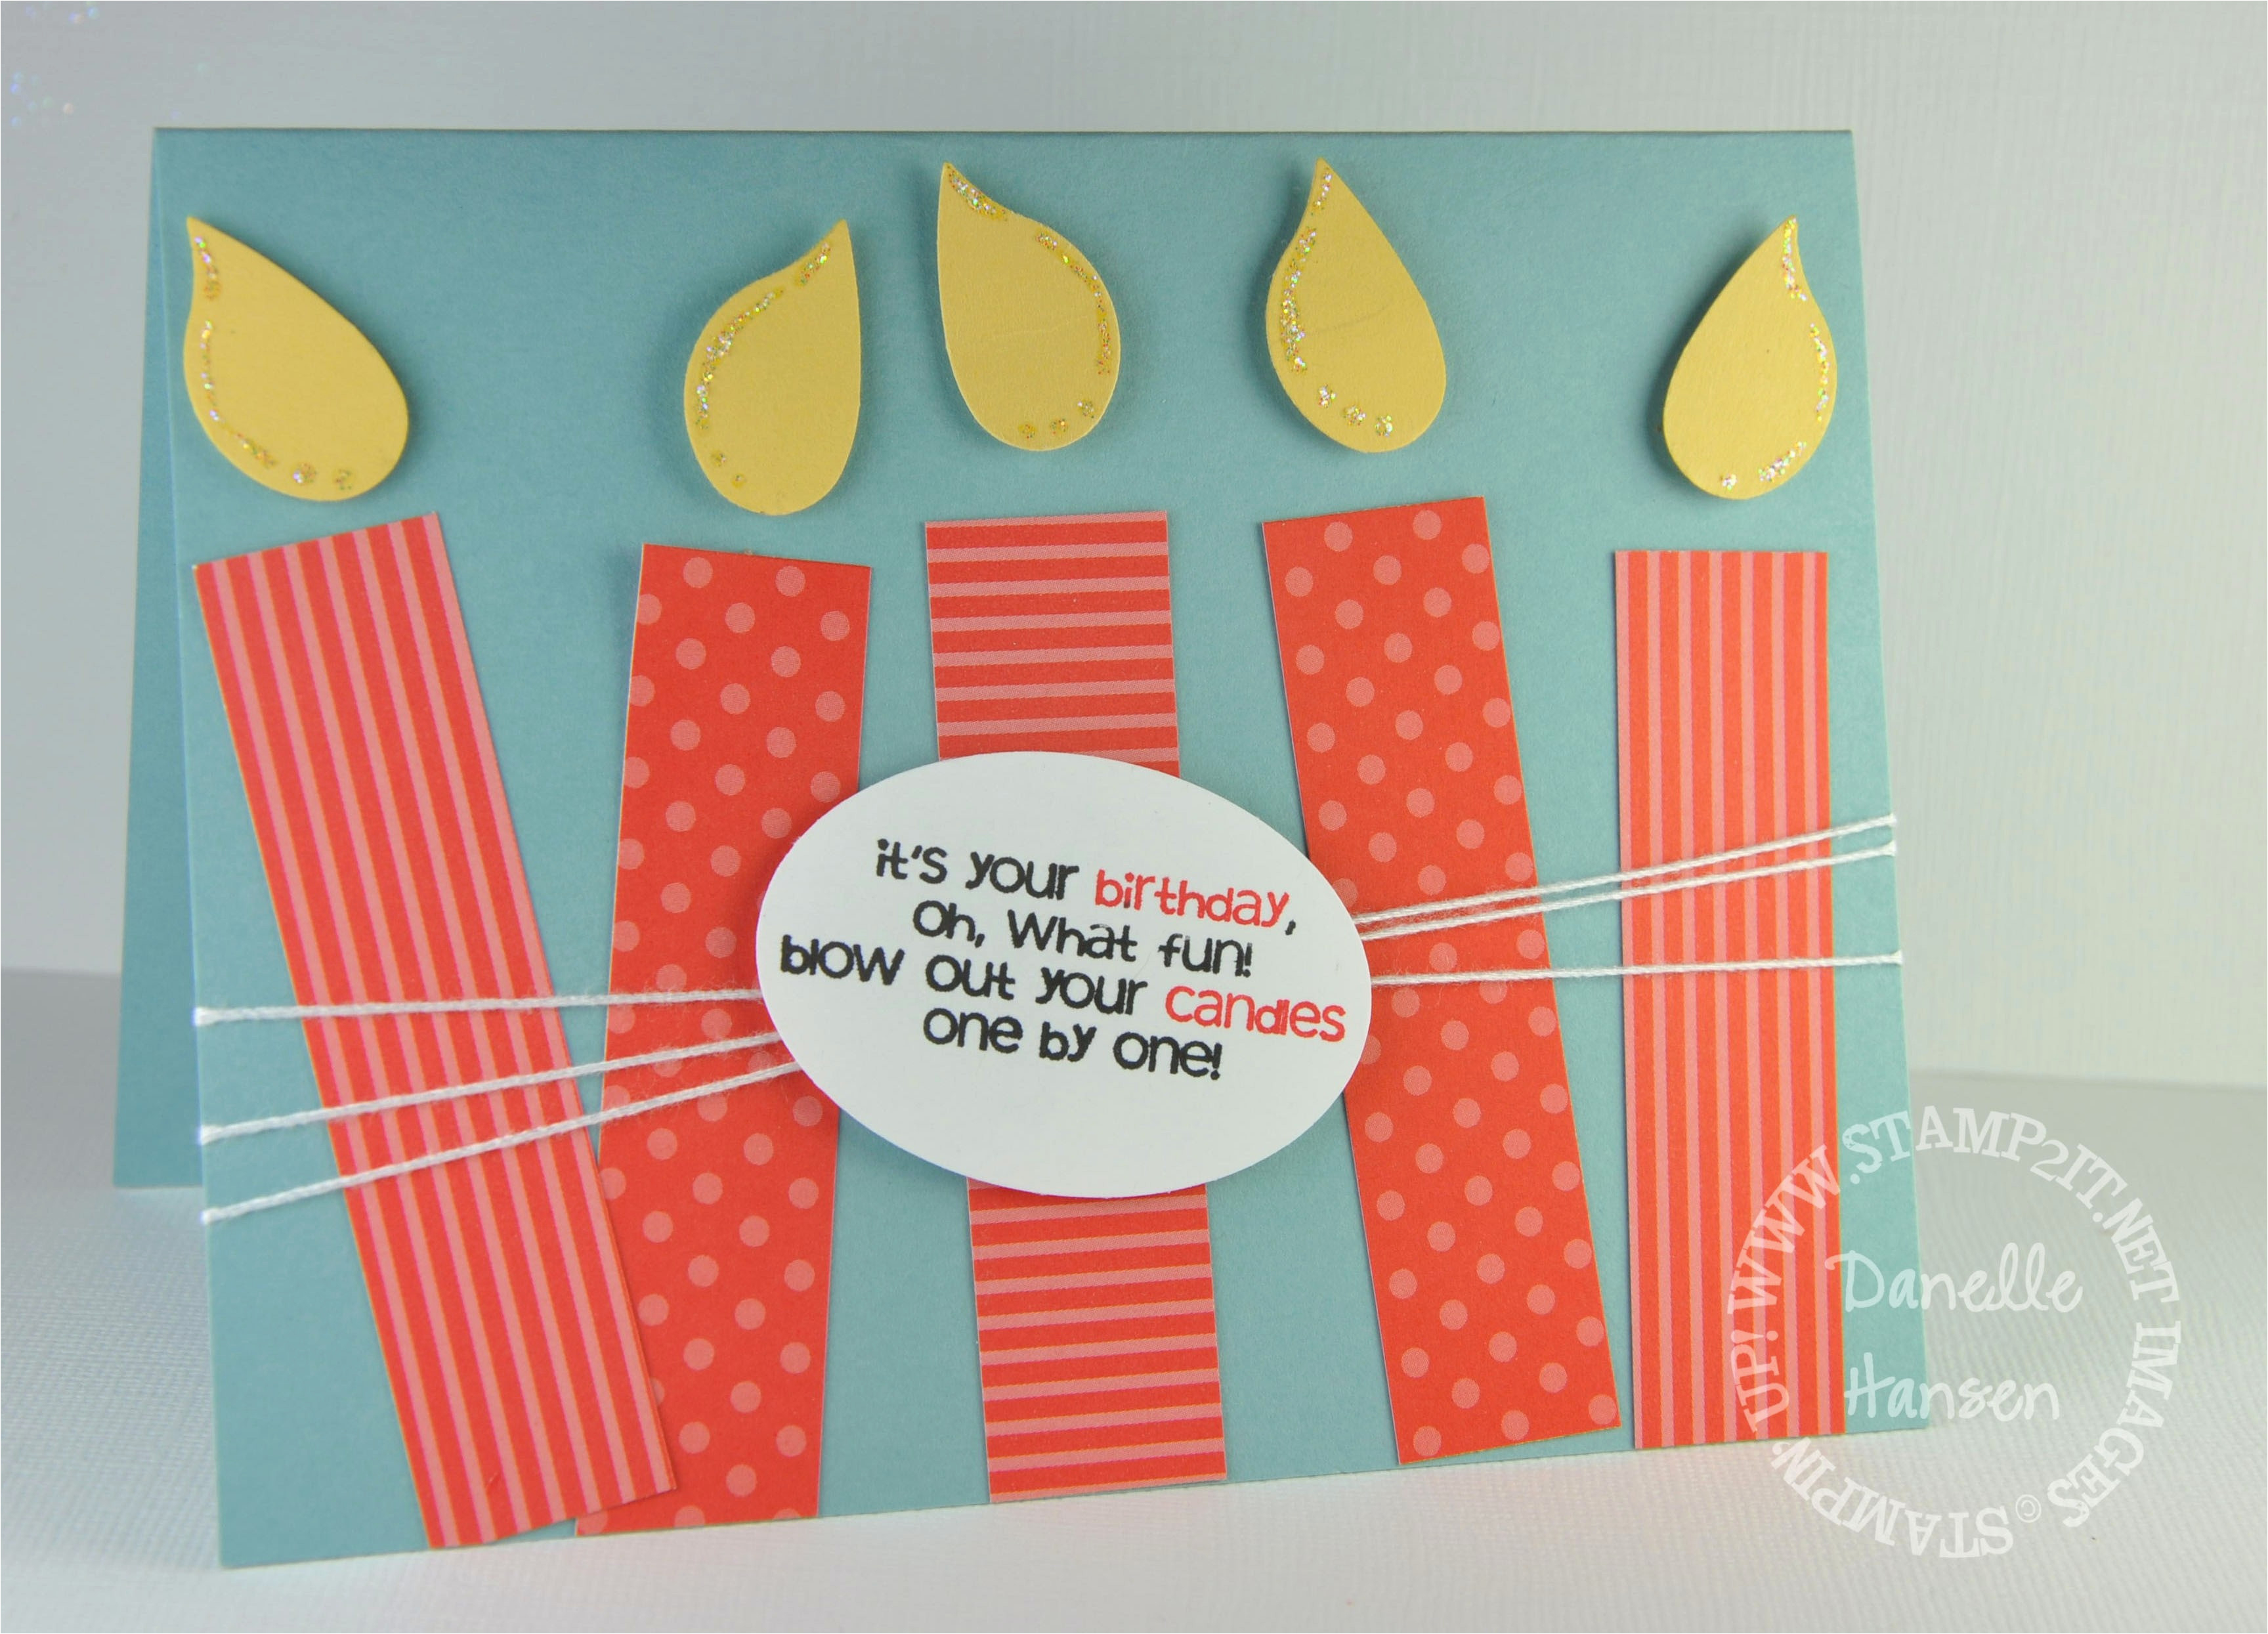 Making Birthday Cards Homemade Birthday Card Ideas Diy Birthday Cards For Husband Creative Handmade Birthday Card Ideas